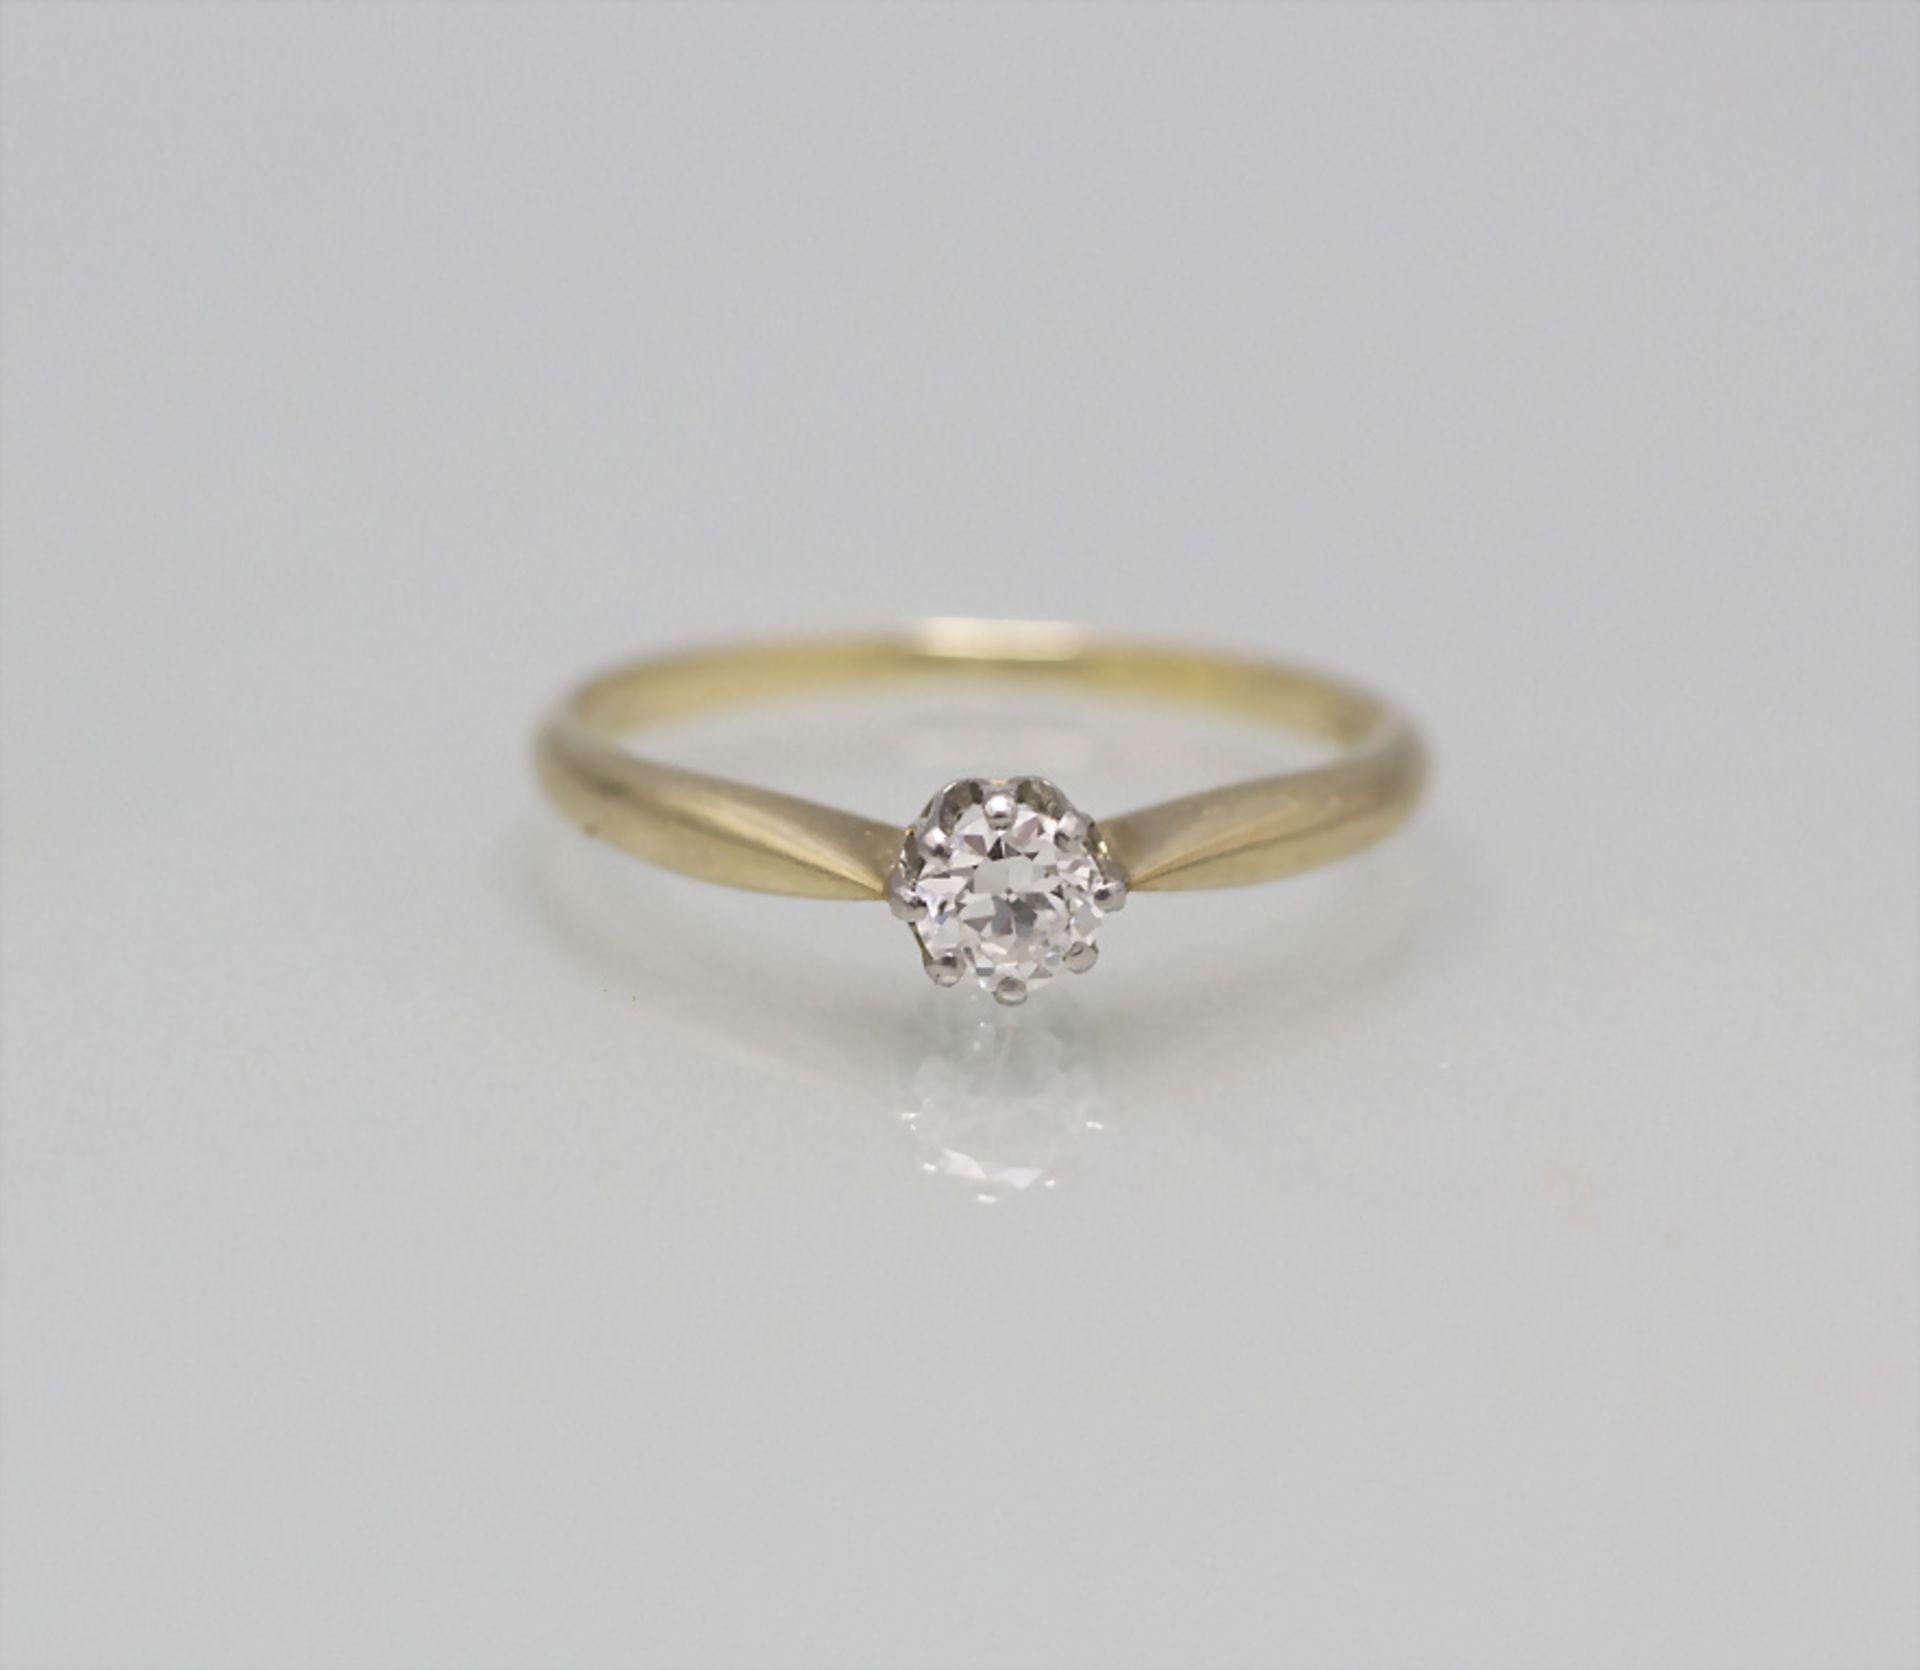 Damenring mit Brillant / A ladies 14 ct gold ring with diamond